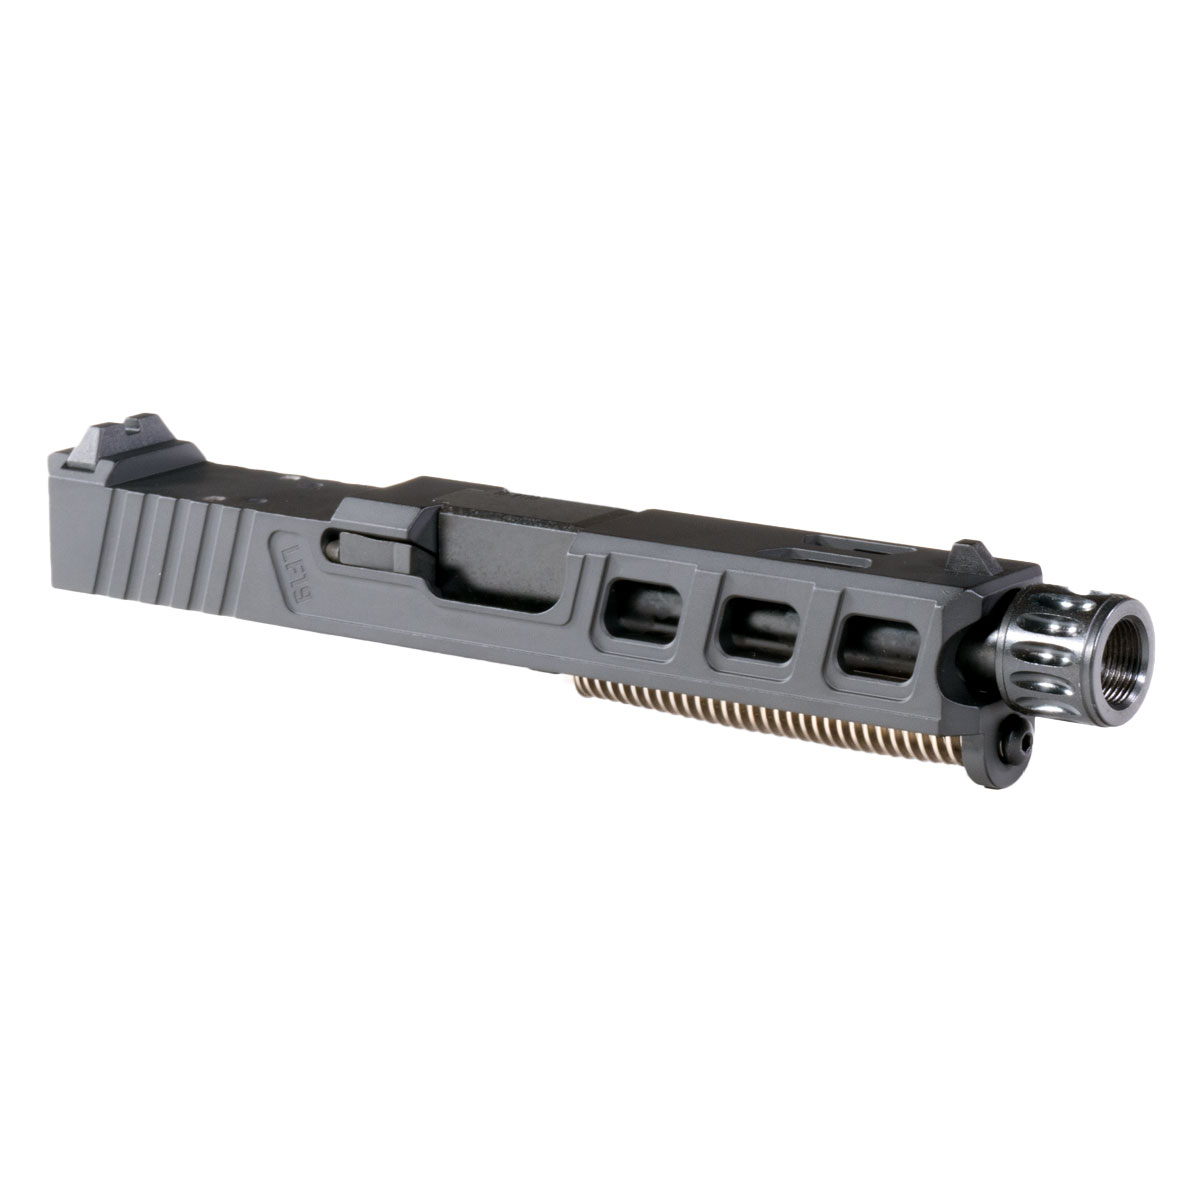 DTT 'Hollow' 9mm Complete Slide Kit - Glock 19 Gen 1-3 Compatible
